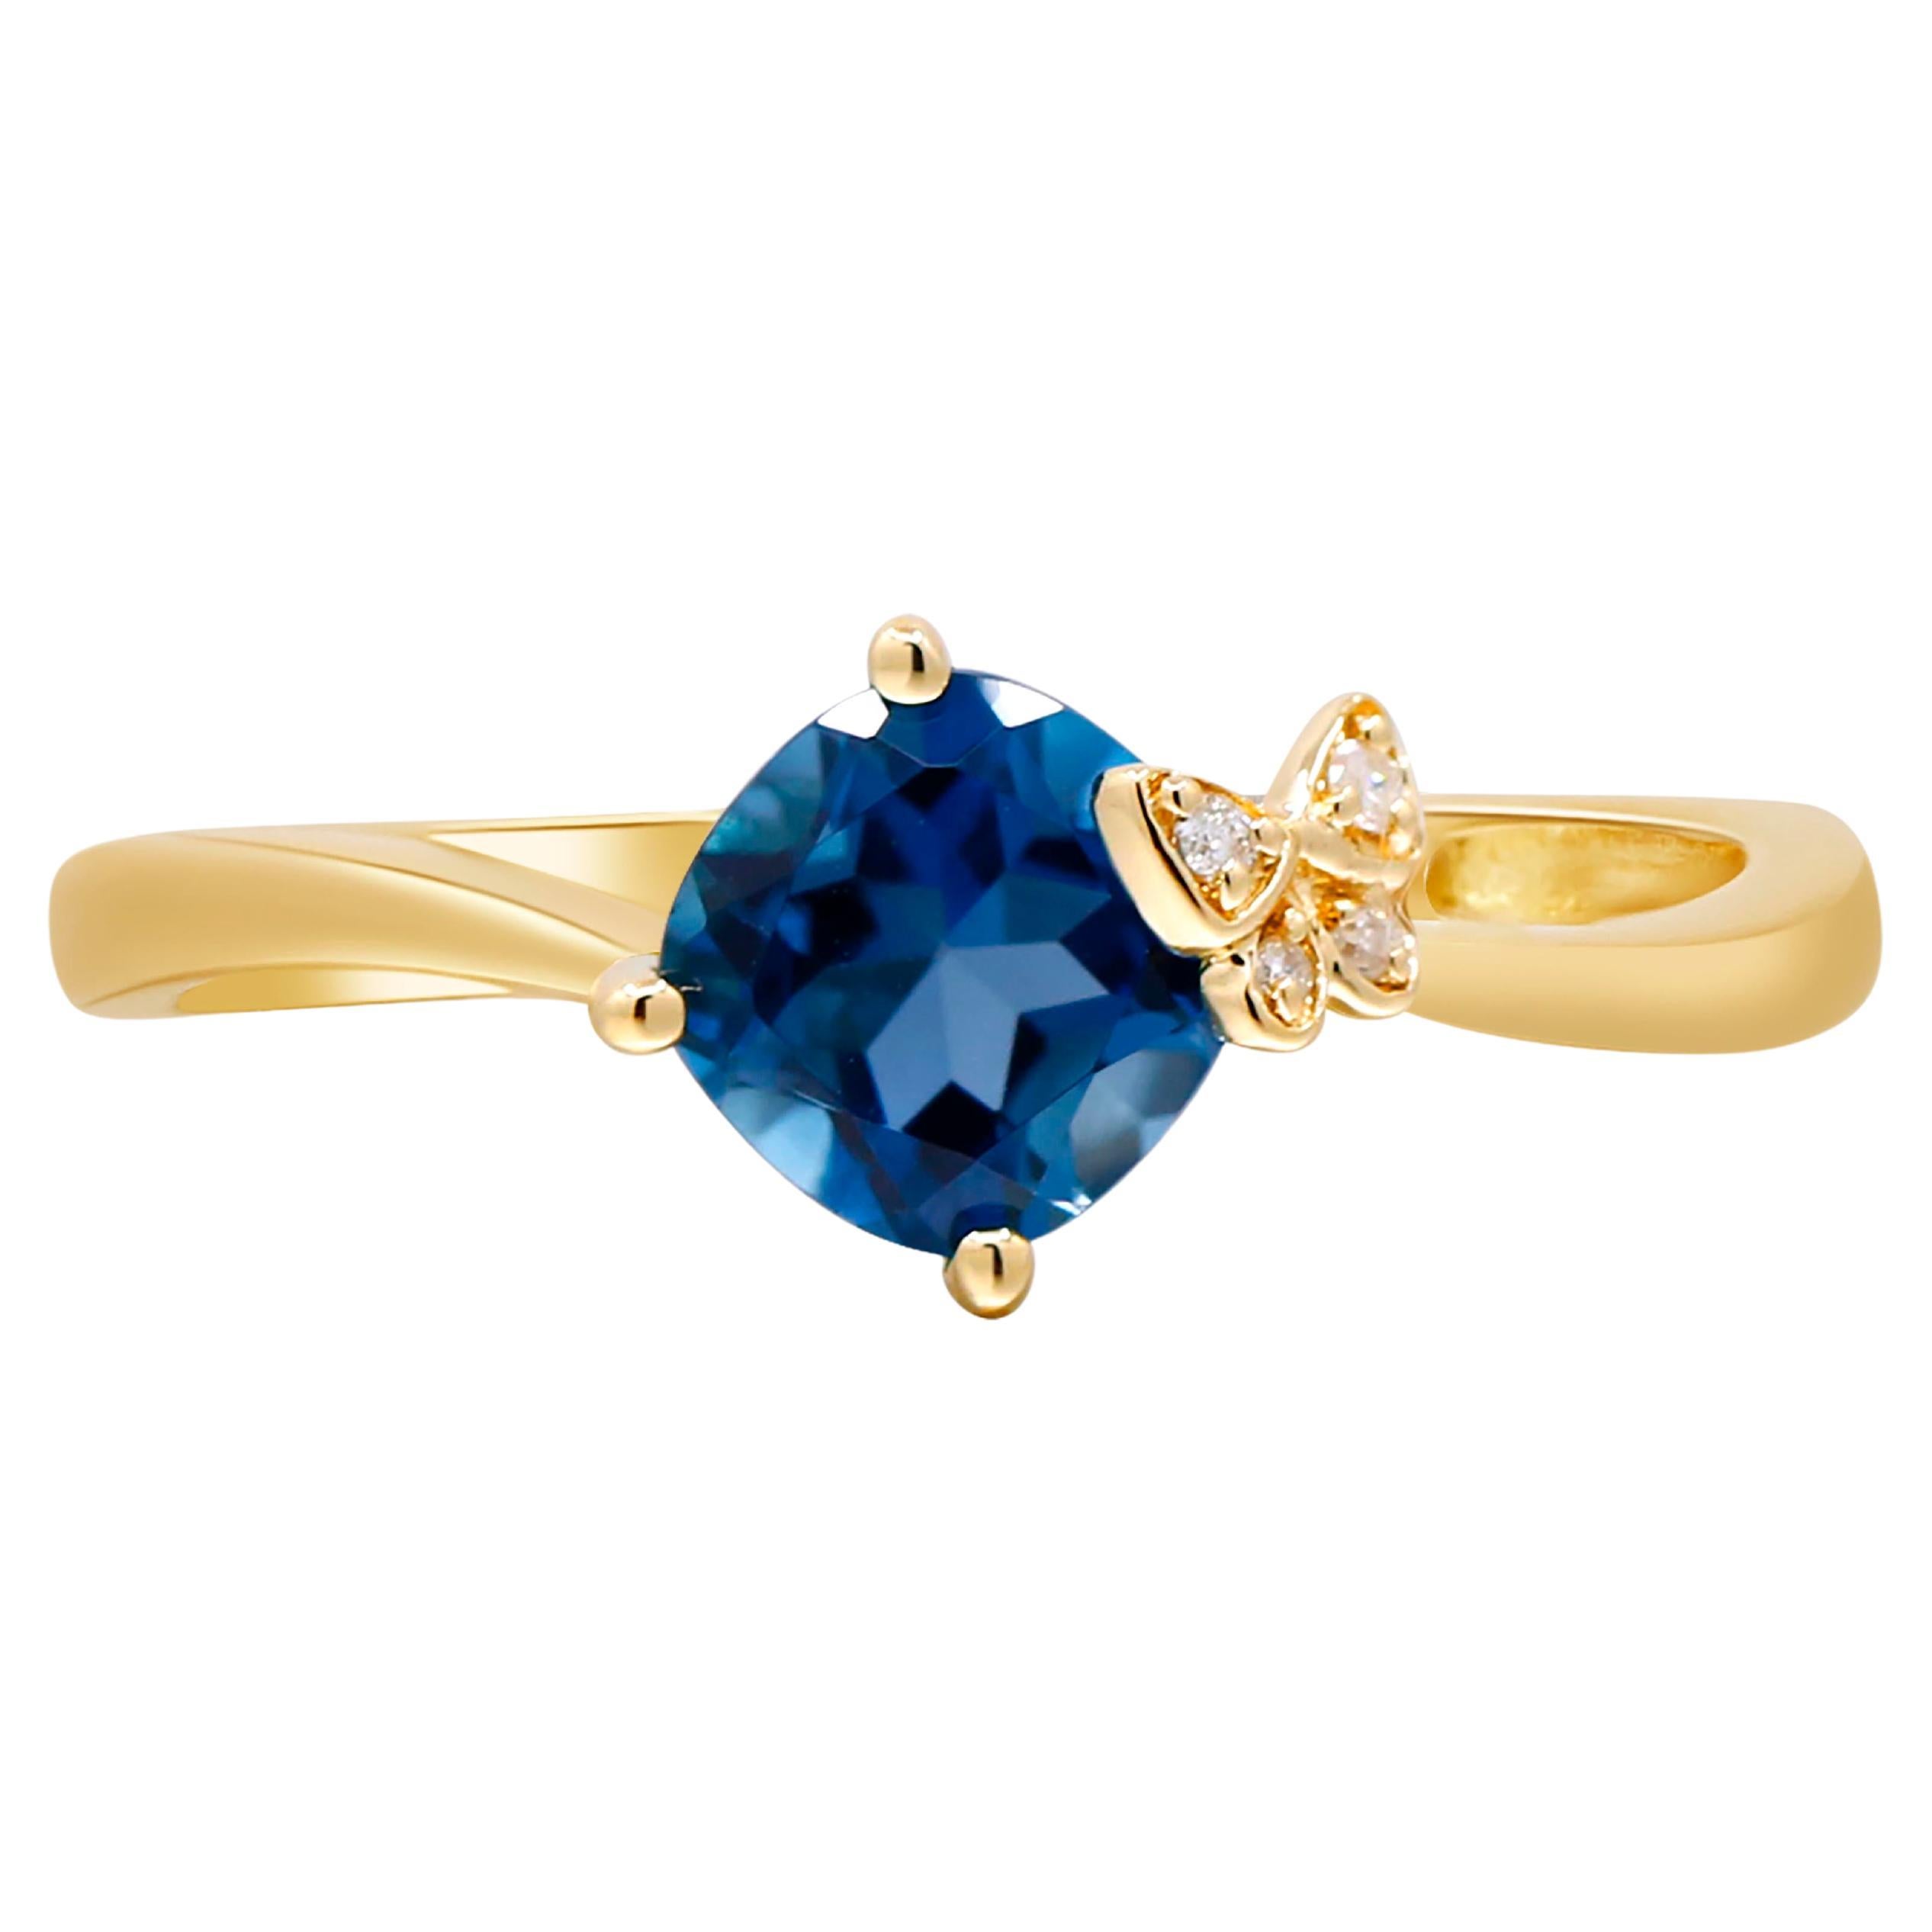 1.19 Carat Cushion-Cut London Blue Topaz Diamond Accents 14K Yellow Gold Ring